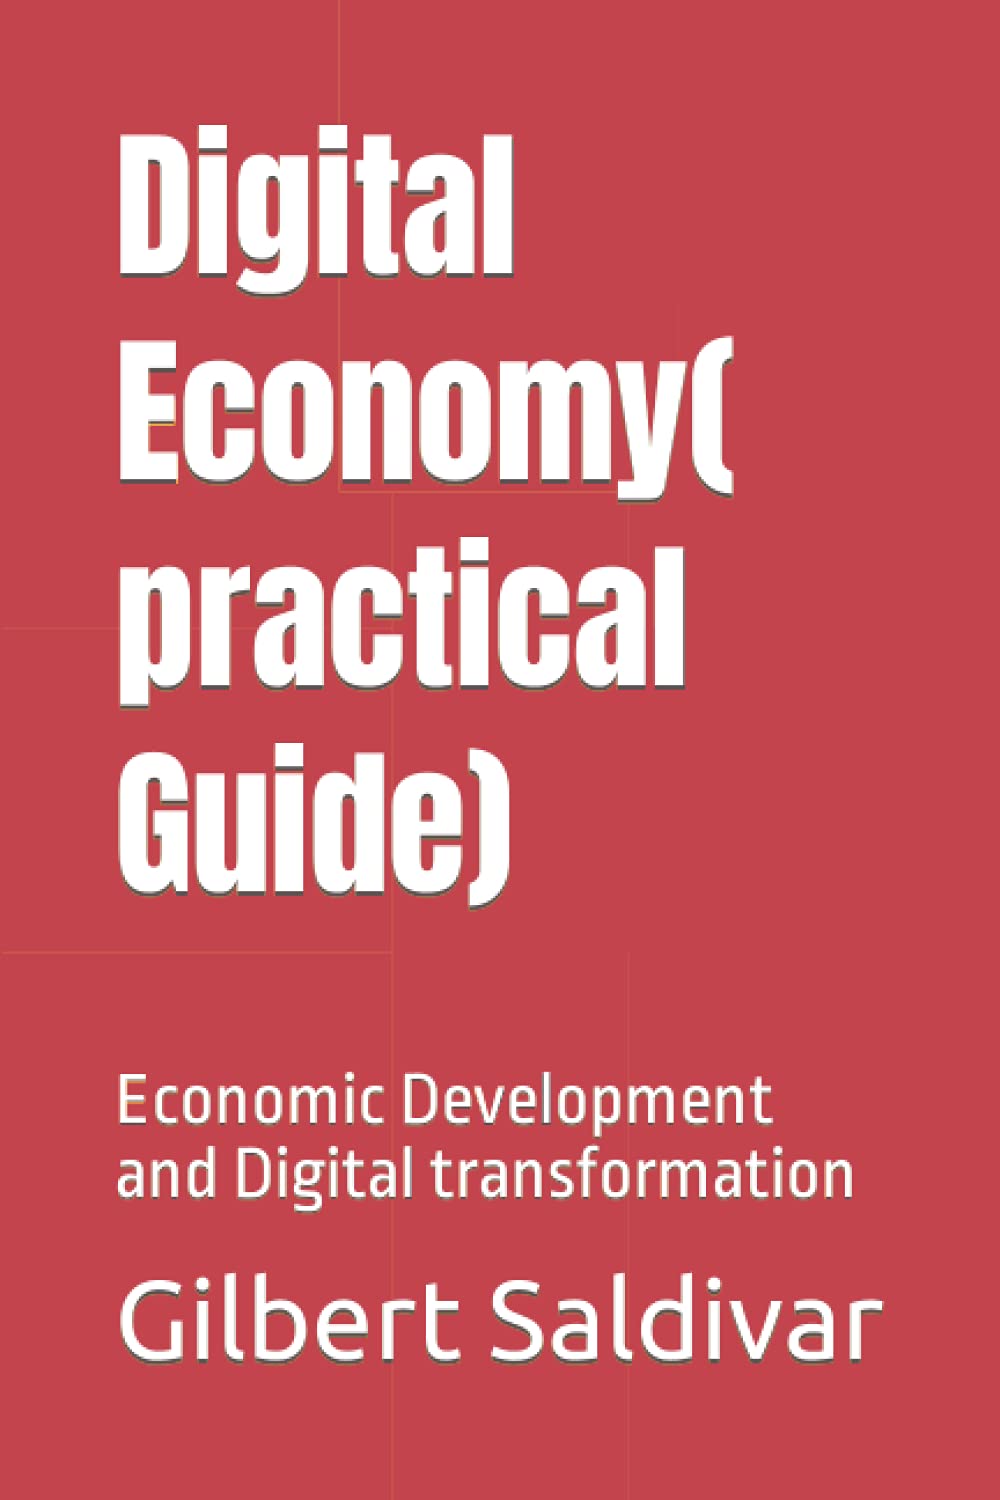 Digital Economy( practical Guide): Economic Development and Digital transformation (Paperback)